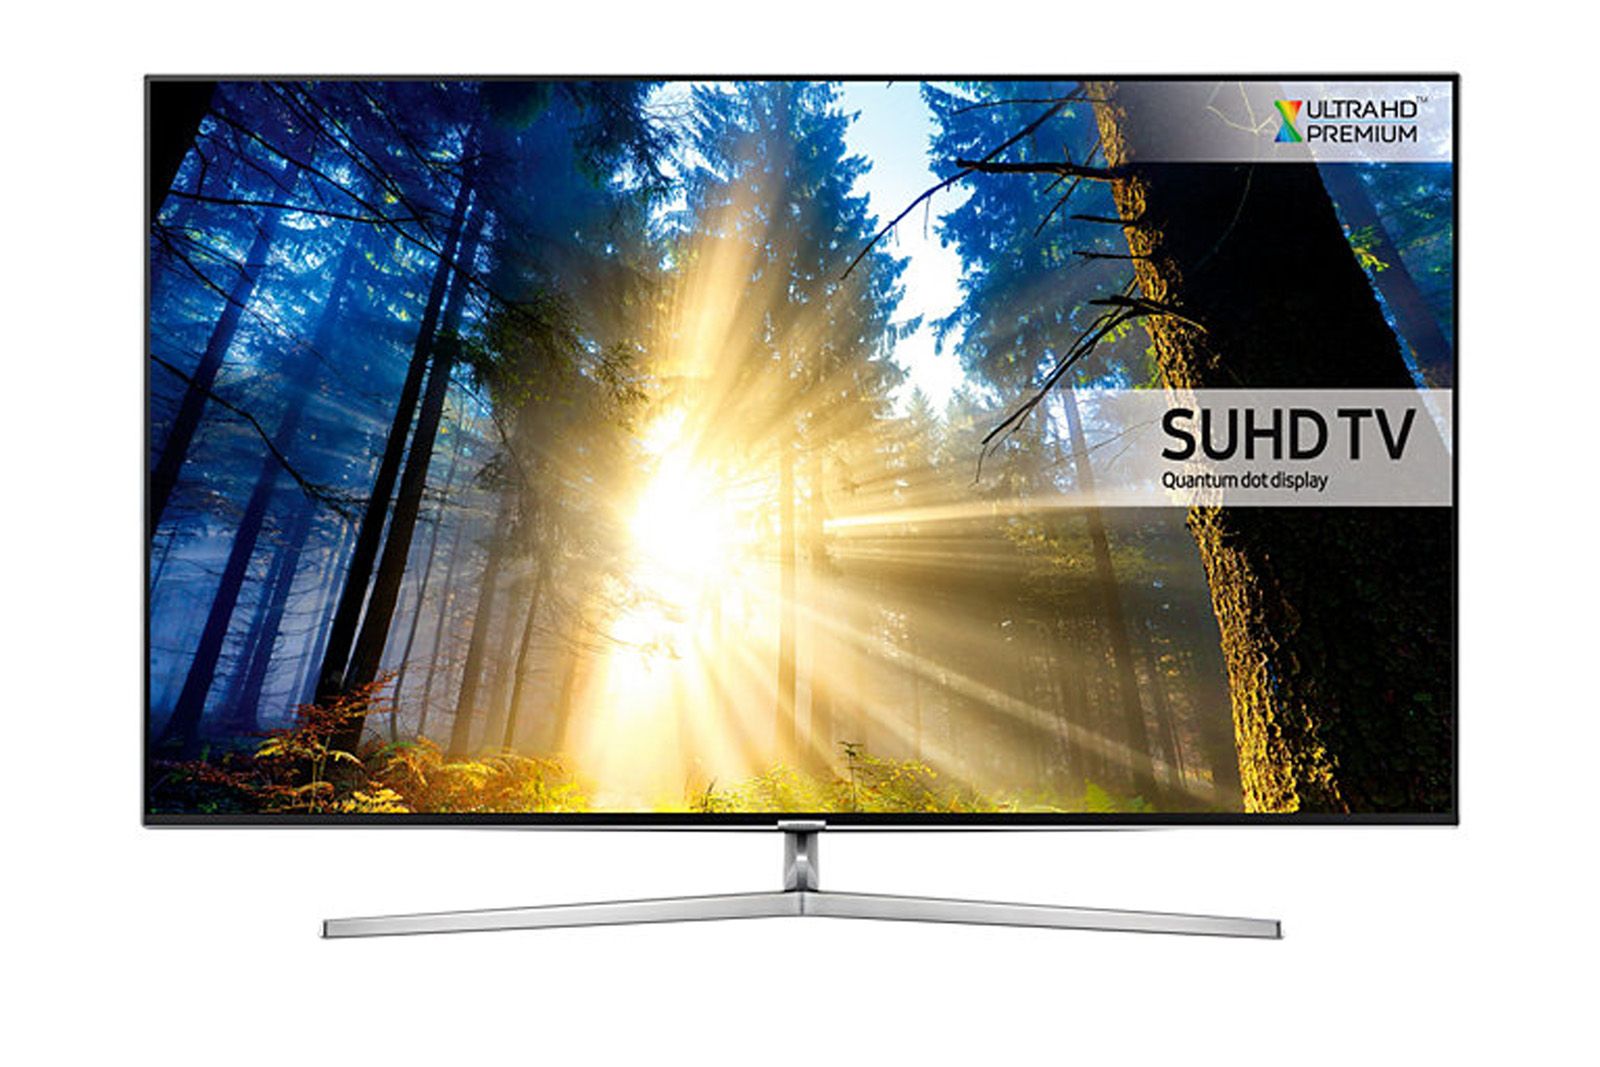 samsung 4k hdr tv choices for 2016 ks9000 ks8000 ks7500 and ks7000 compared image 4